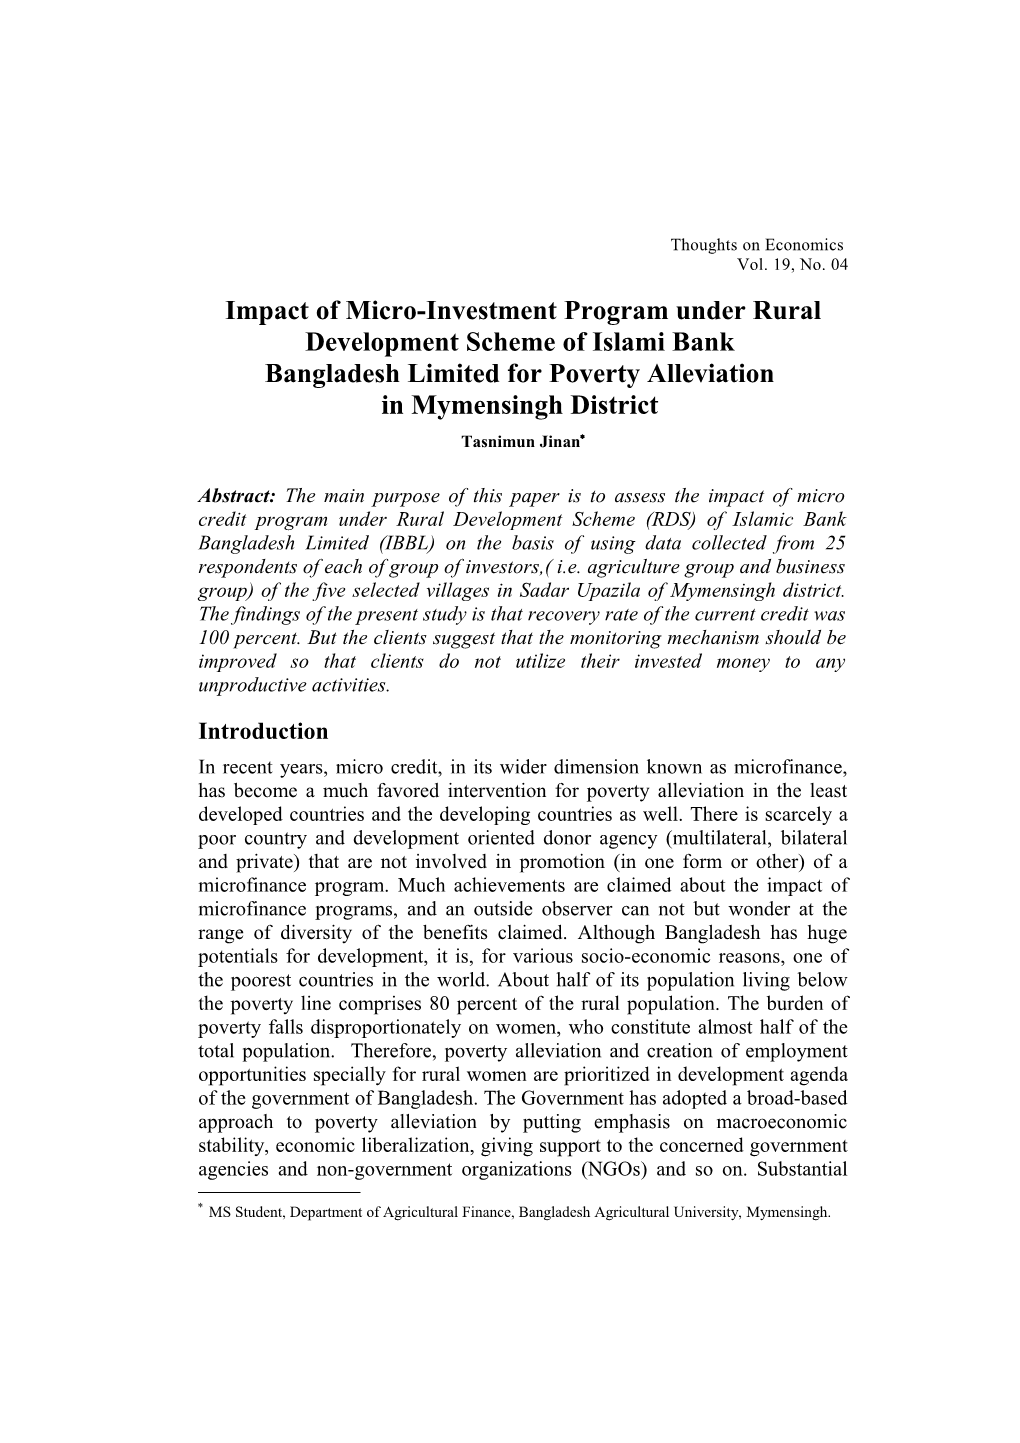 Impact of Micro-Credit Program Under Rural Development Scheme of Islamic Bangladesh Limited